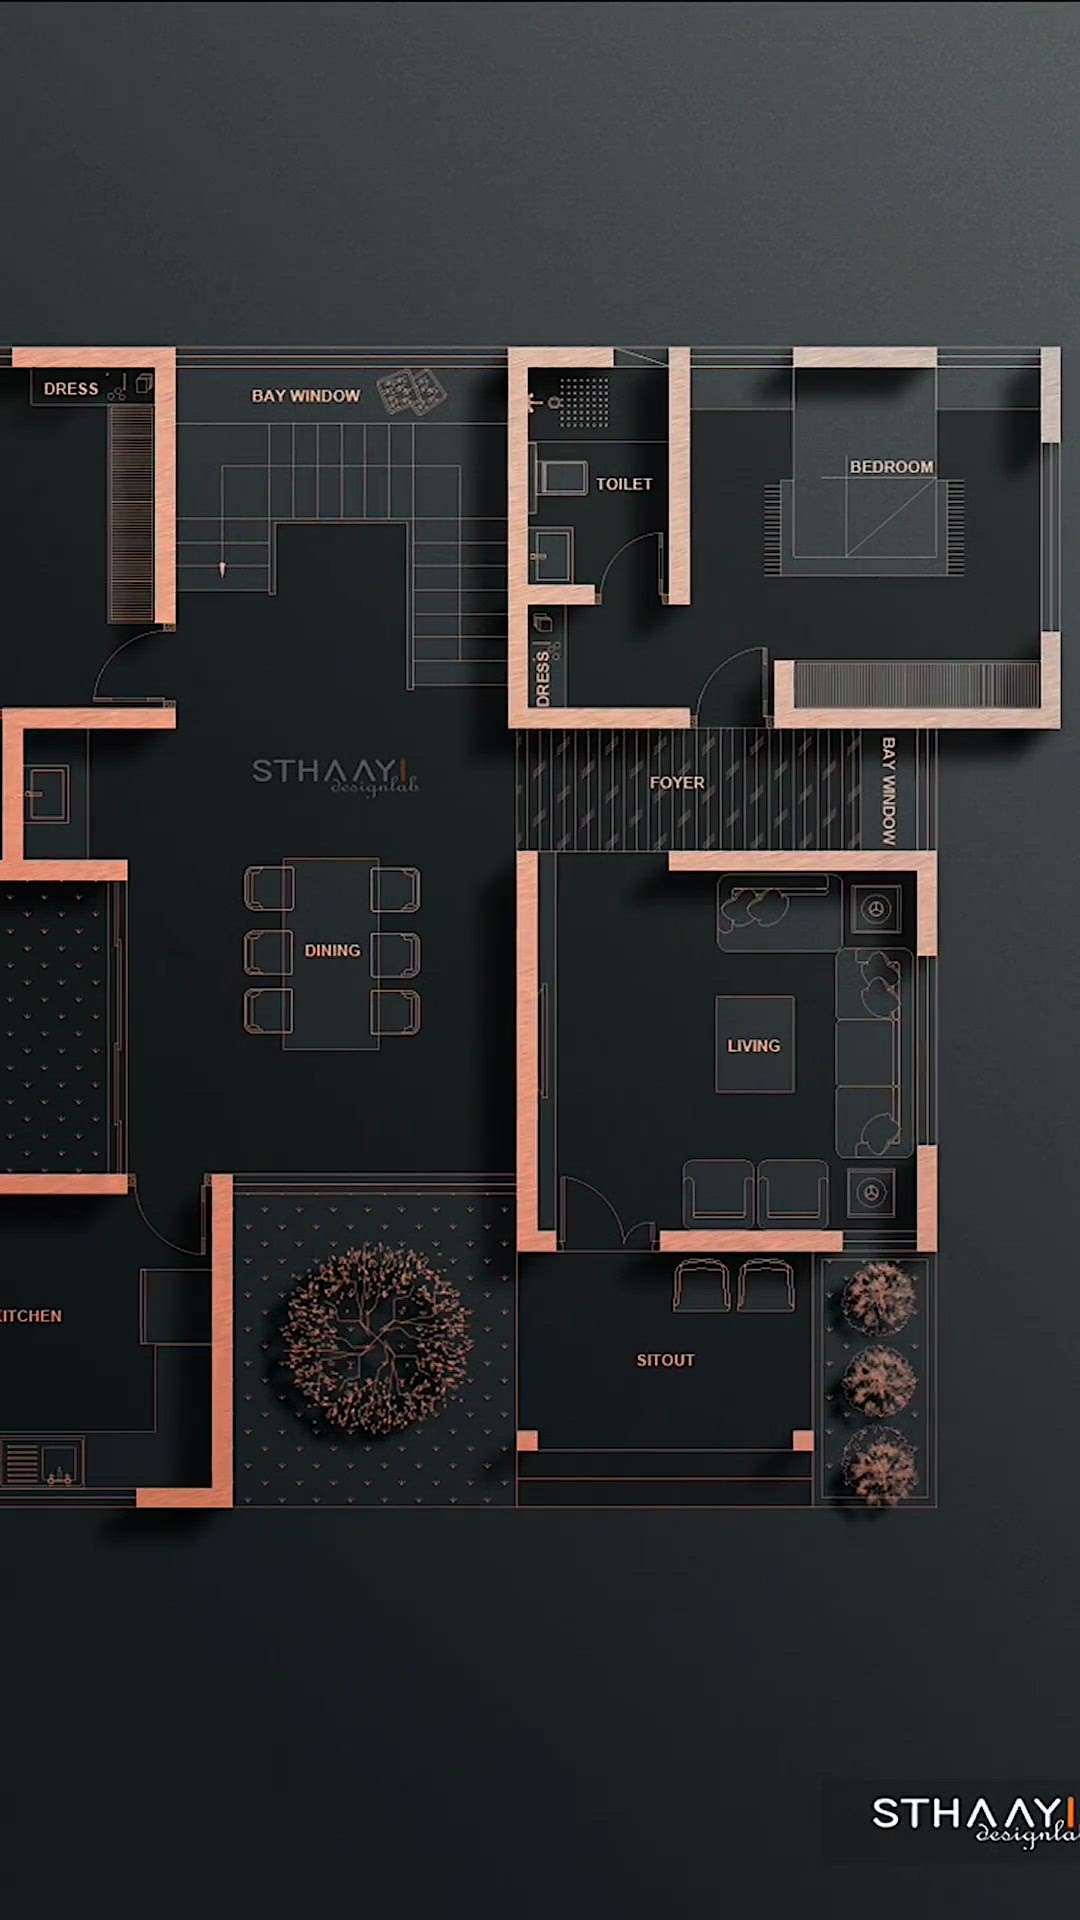 Budget Home 🏡 Minimal Plan 🏕 2BHK 🏡 Design:@sthaayi_design_lab 

Follow more 👉 @sthaayi_design_lab

.

.

.

.

.
#keralahomes 
#keralahomedesign 
#keralaarchitecture 
#repost 
#house 
#keralaarchitecture 
#viralhomes 
#trendingaudio #1312